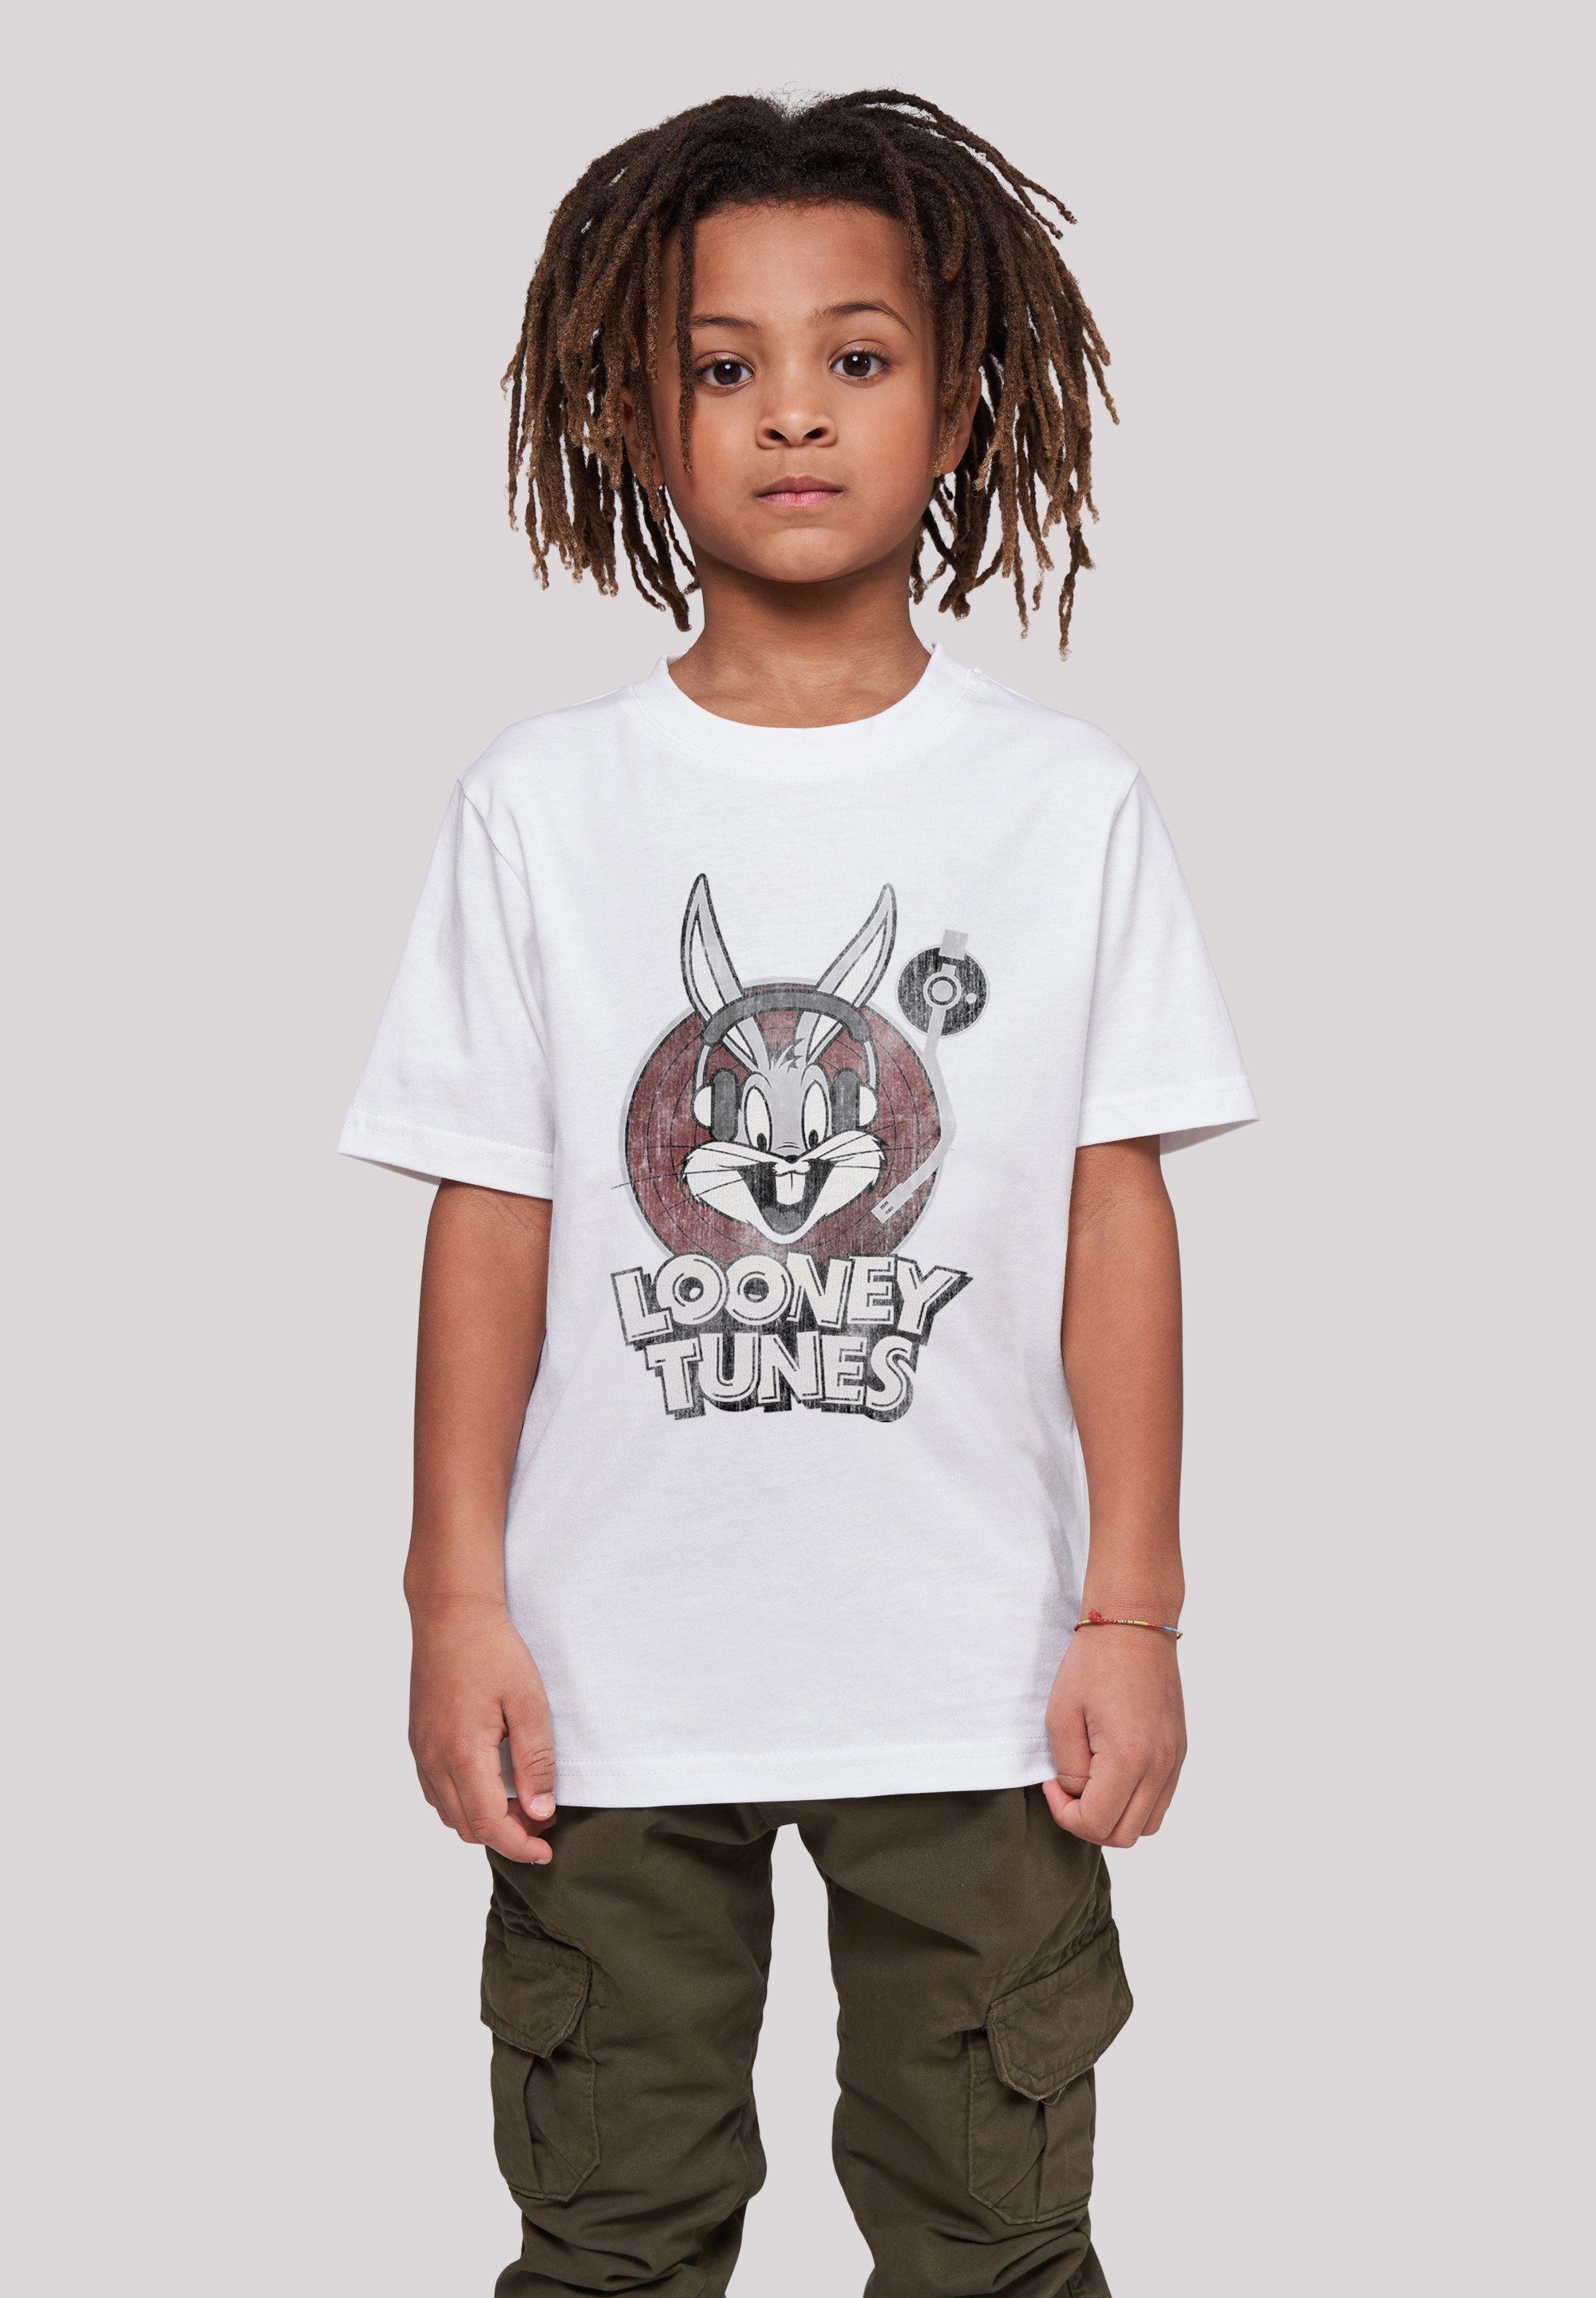 F4NT4STIC T-Shirt T-Shirt 'Looney Tunes weiß Bugs Bunny' Unisex Merch,Jungen,Mädchen,Bedruckt Kinder,Premium